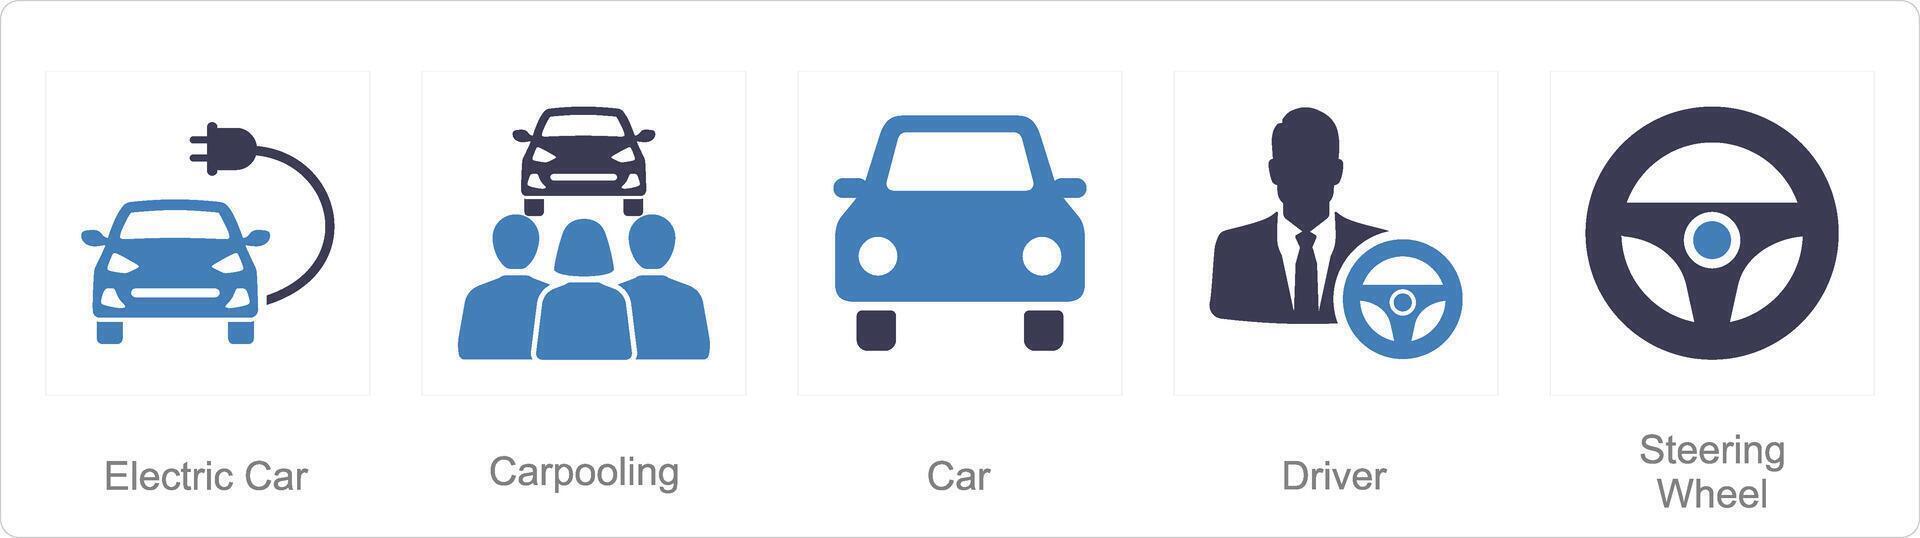 A set of 5 Car icons as electric car, carpooling, car vector